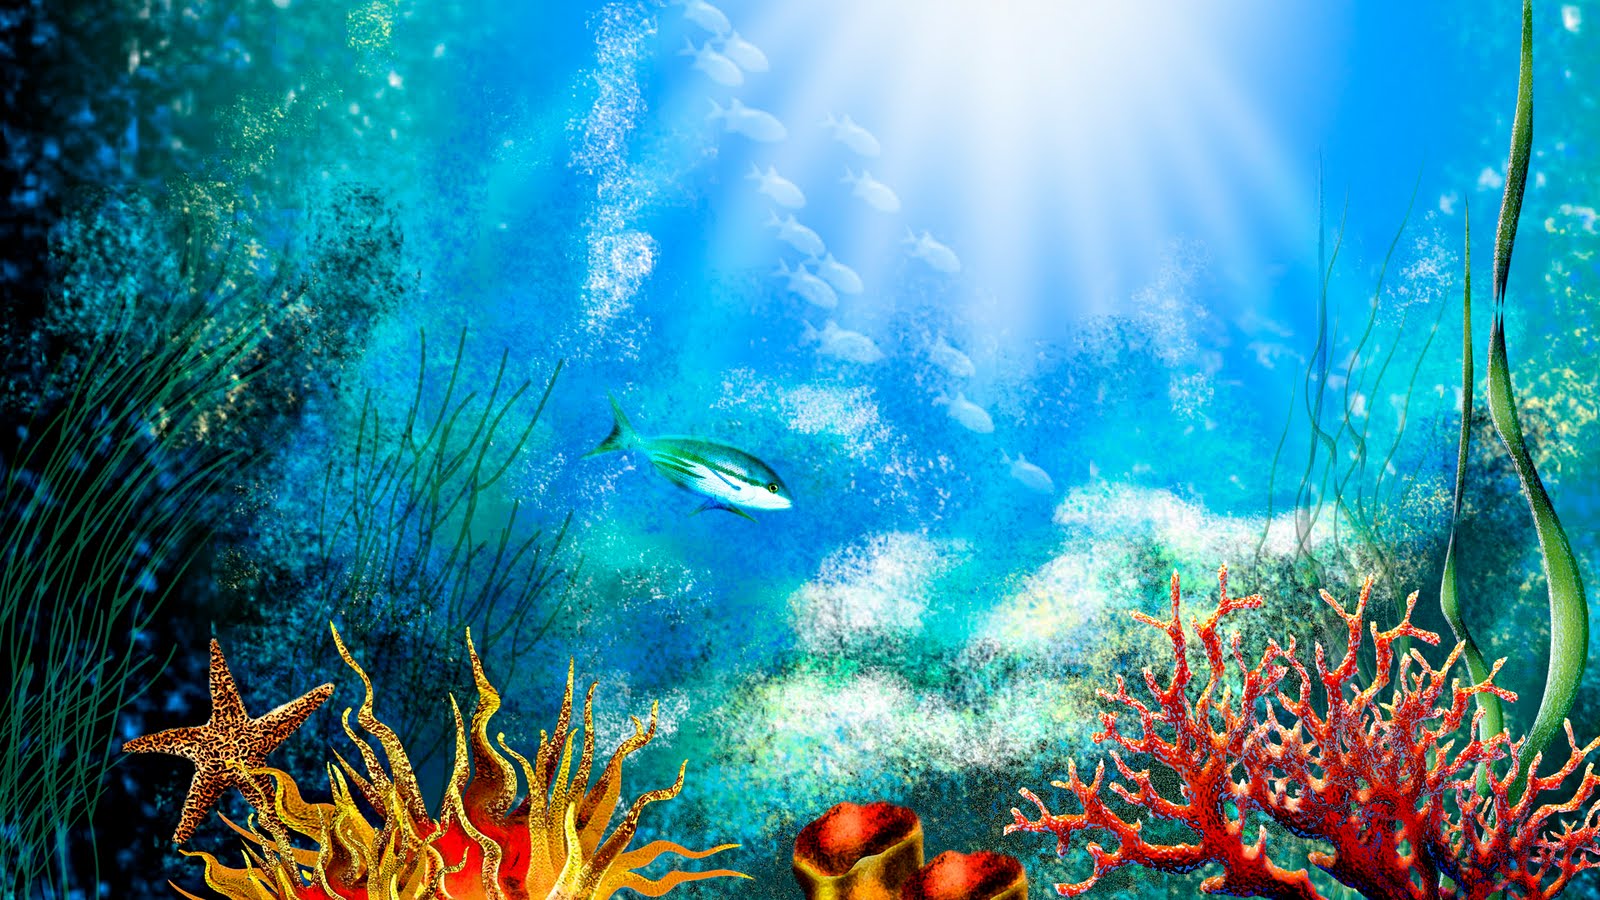 aquarium tapete hd,unter wasser,meeresbiologie,korallenriff,korallenrifffische,riff